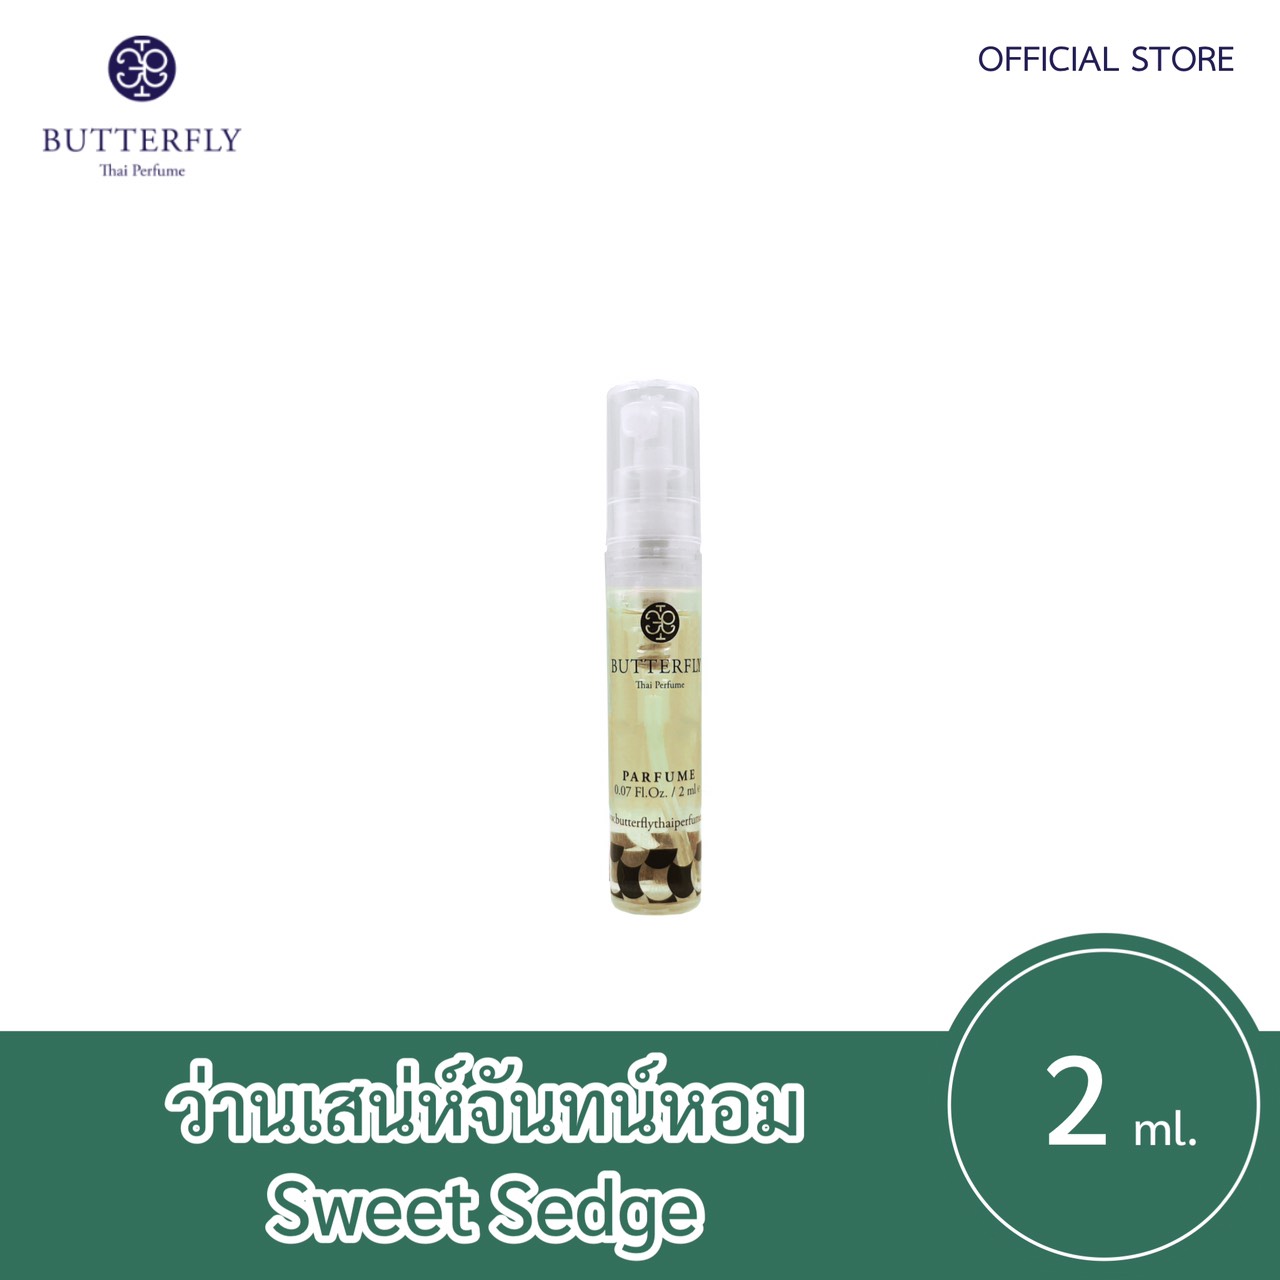 Butterfly Thai Perfume - น้ำหอมบัตเตอร์ฟลาย ไทย เพอร์ฟูม  ขนาดทดลอง 2ml.  กลิ่น ว่านเสน่ห์จันทน์หอมปริมาณ (มล.) 2